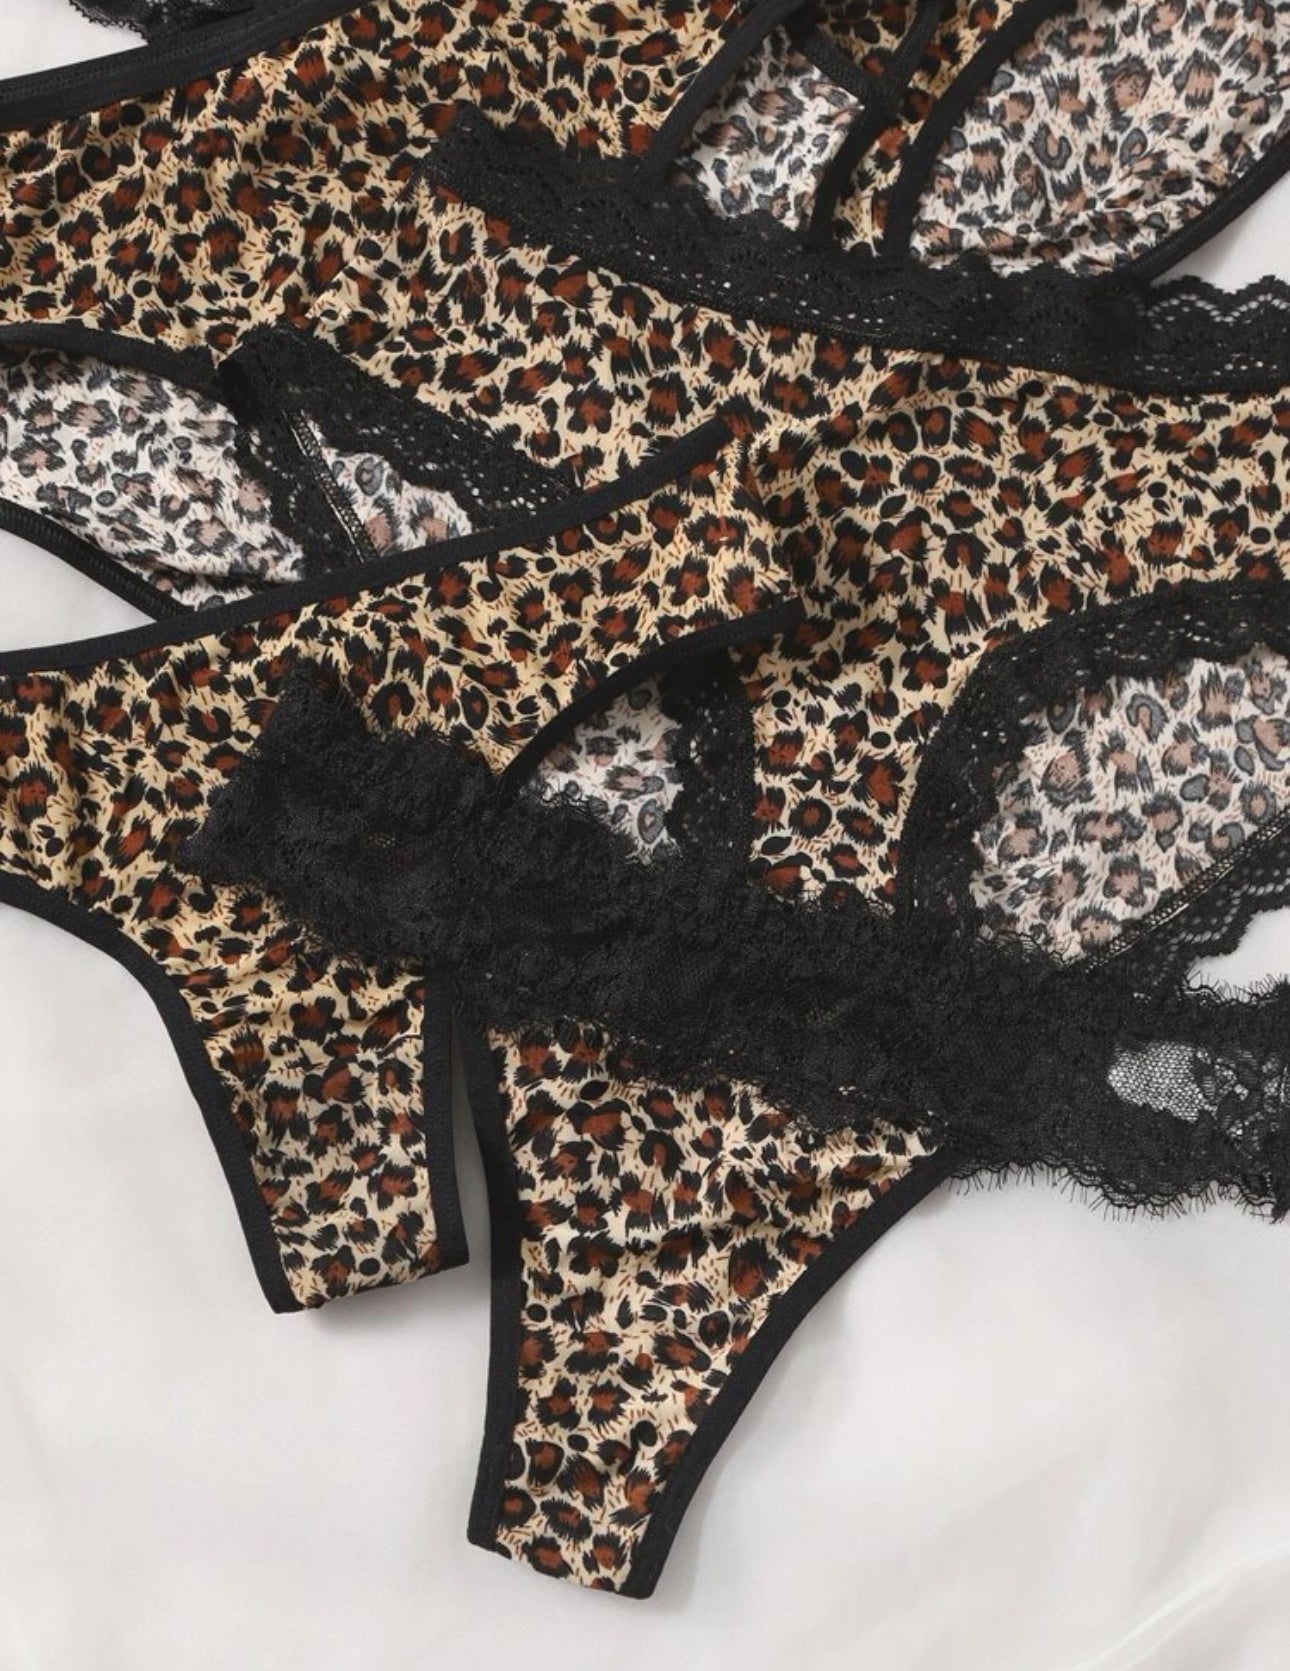 6-Pack Leopard Contrast Lace Mid Rise Panty Set